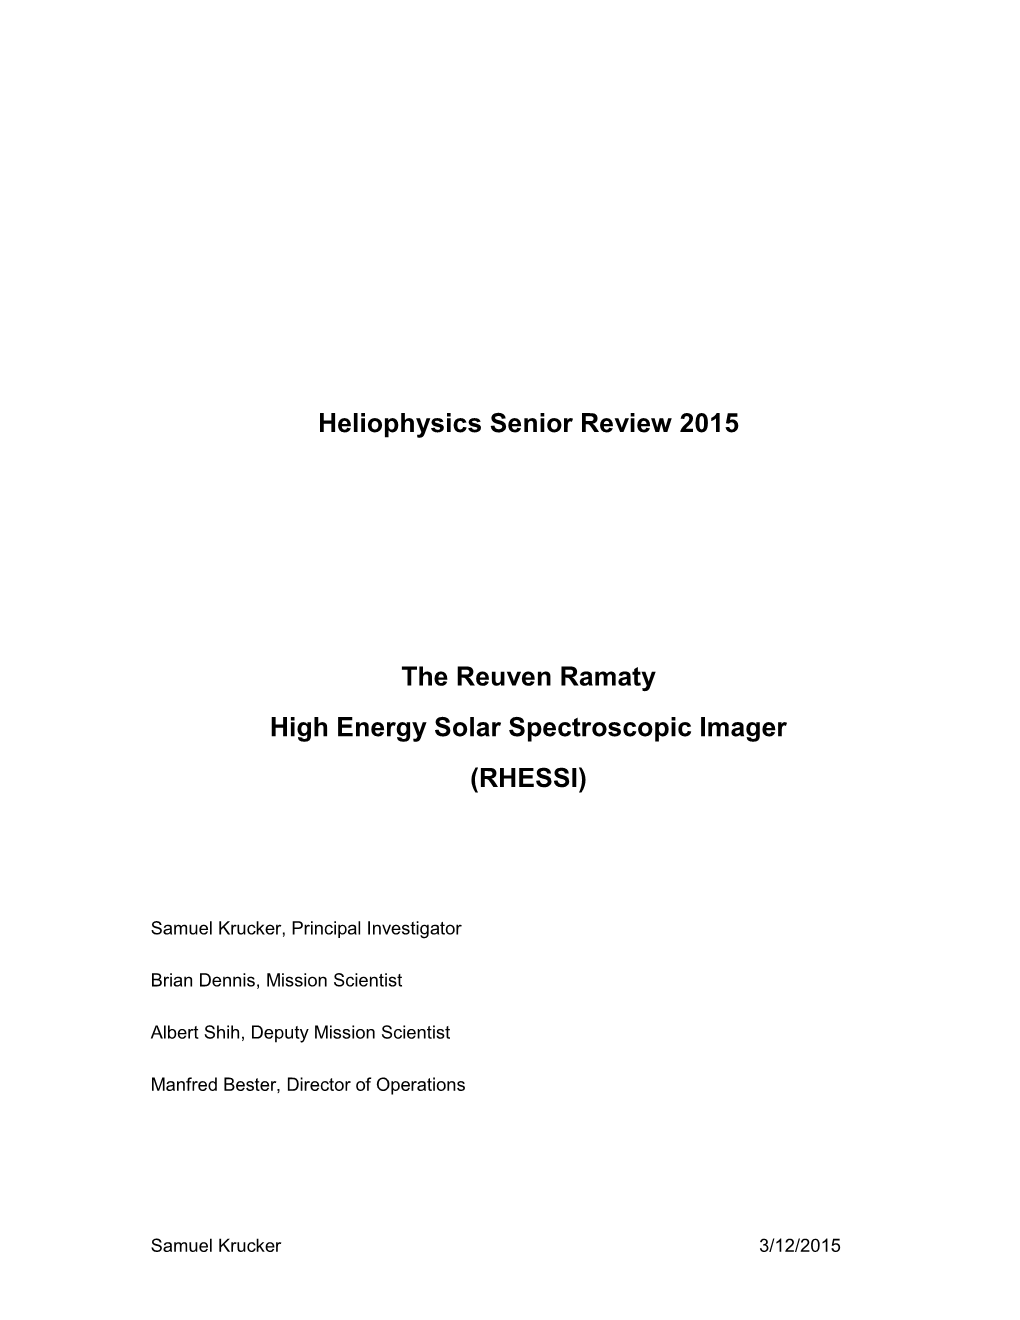 Heliophysics Senior Review 2015 the Reuven Ramaty High